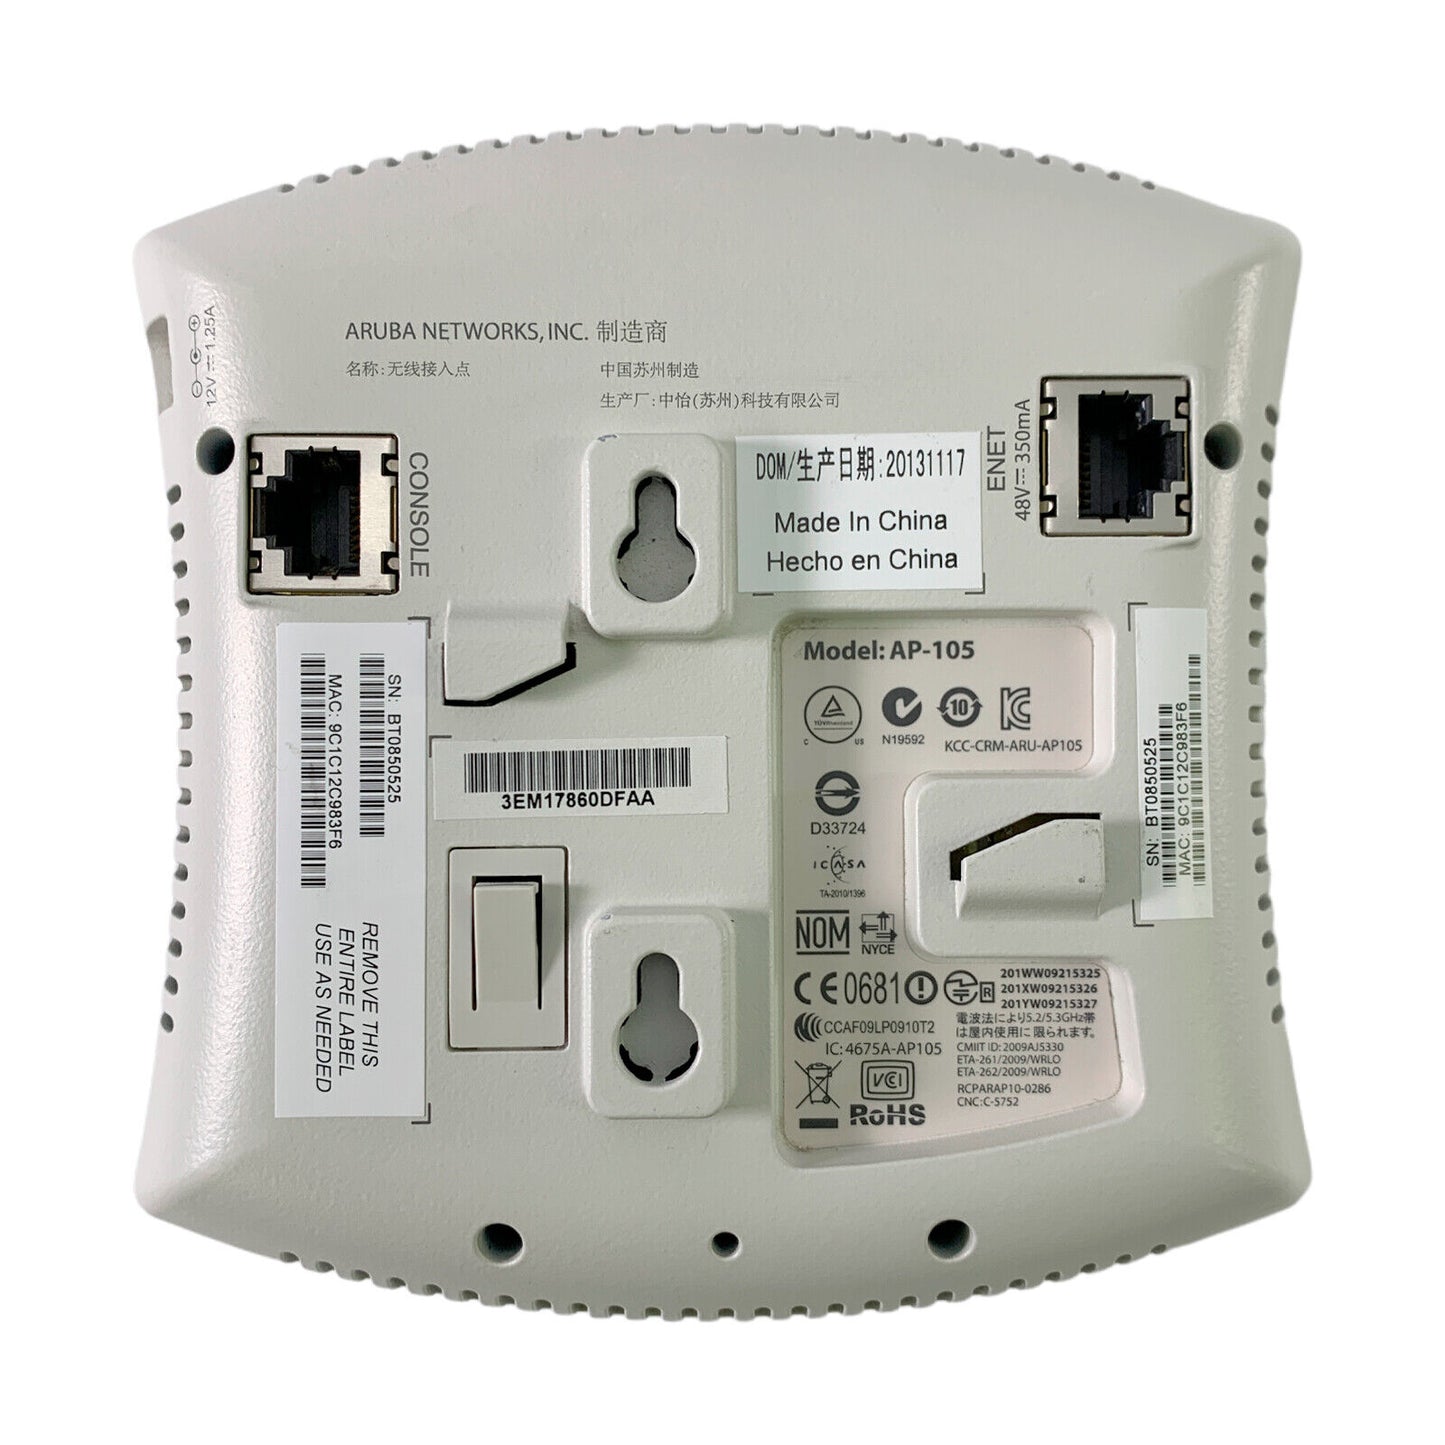 Aruba Networks AP-105 ARU-AP105 Dual Band 2.4&5Ghz Wireless Access Point 300Mbps